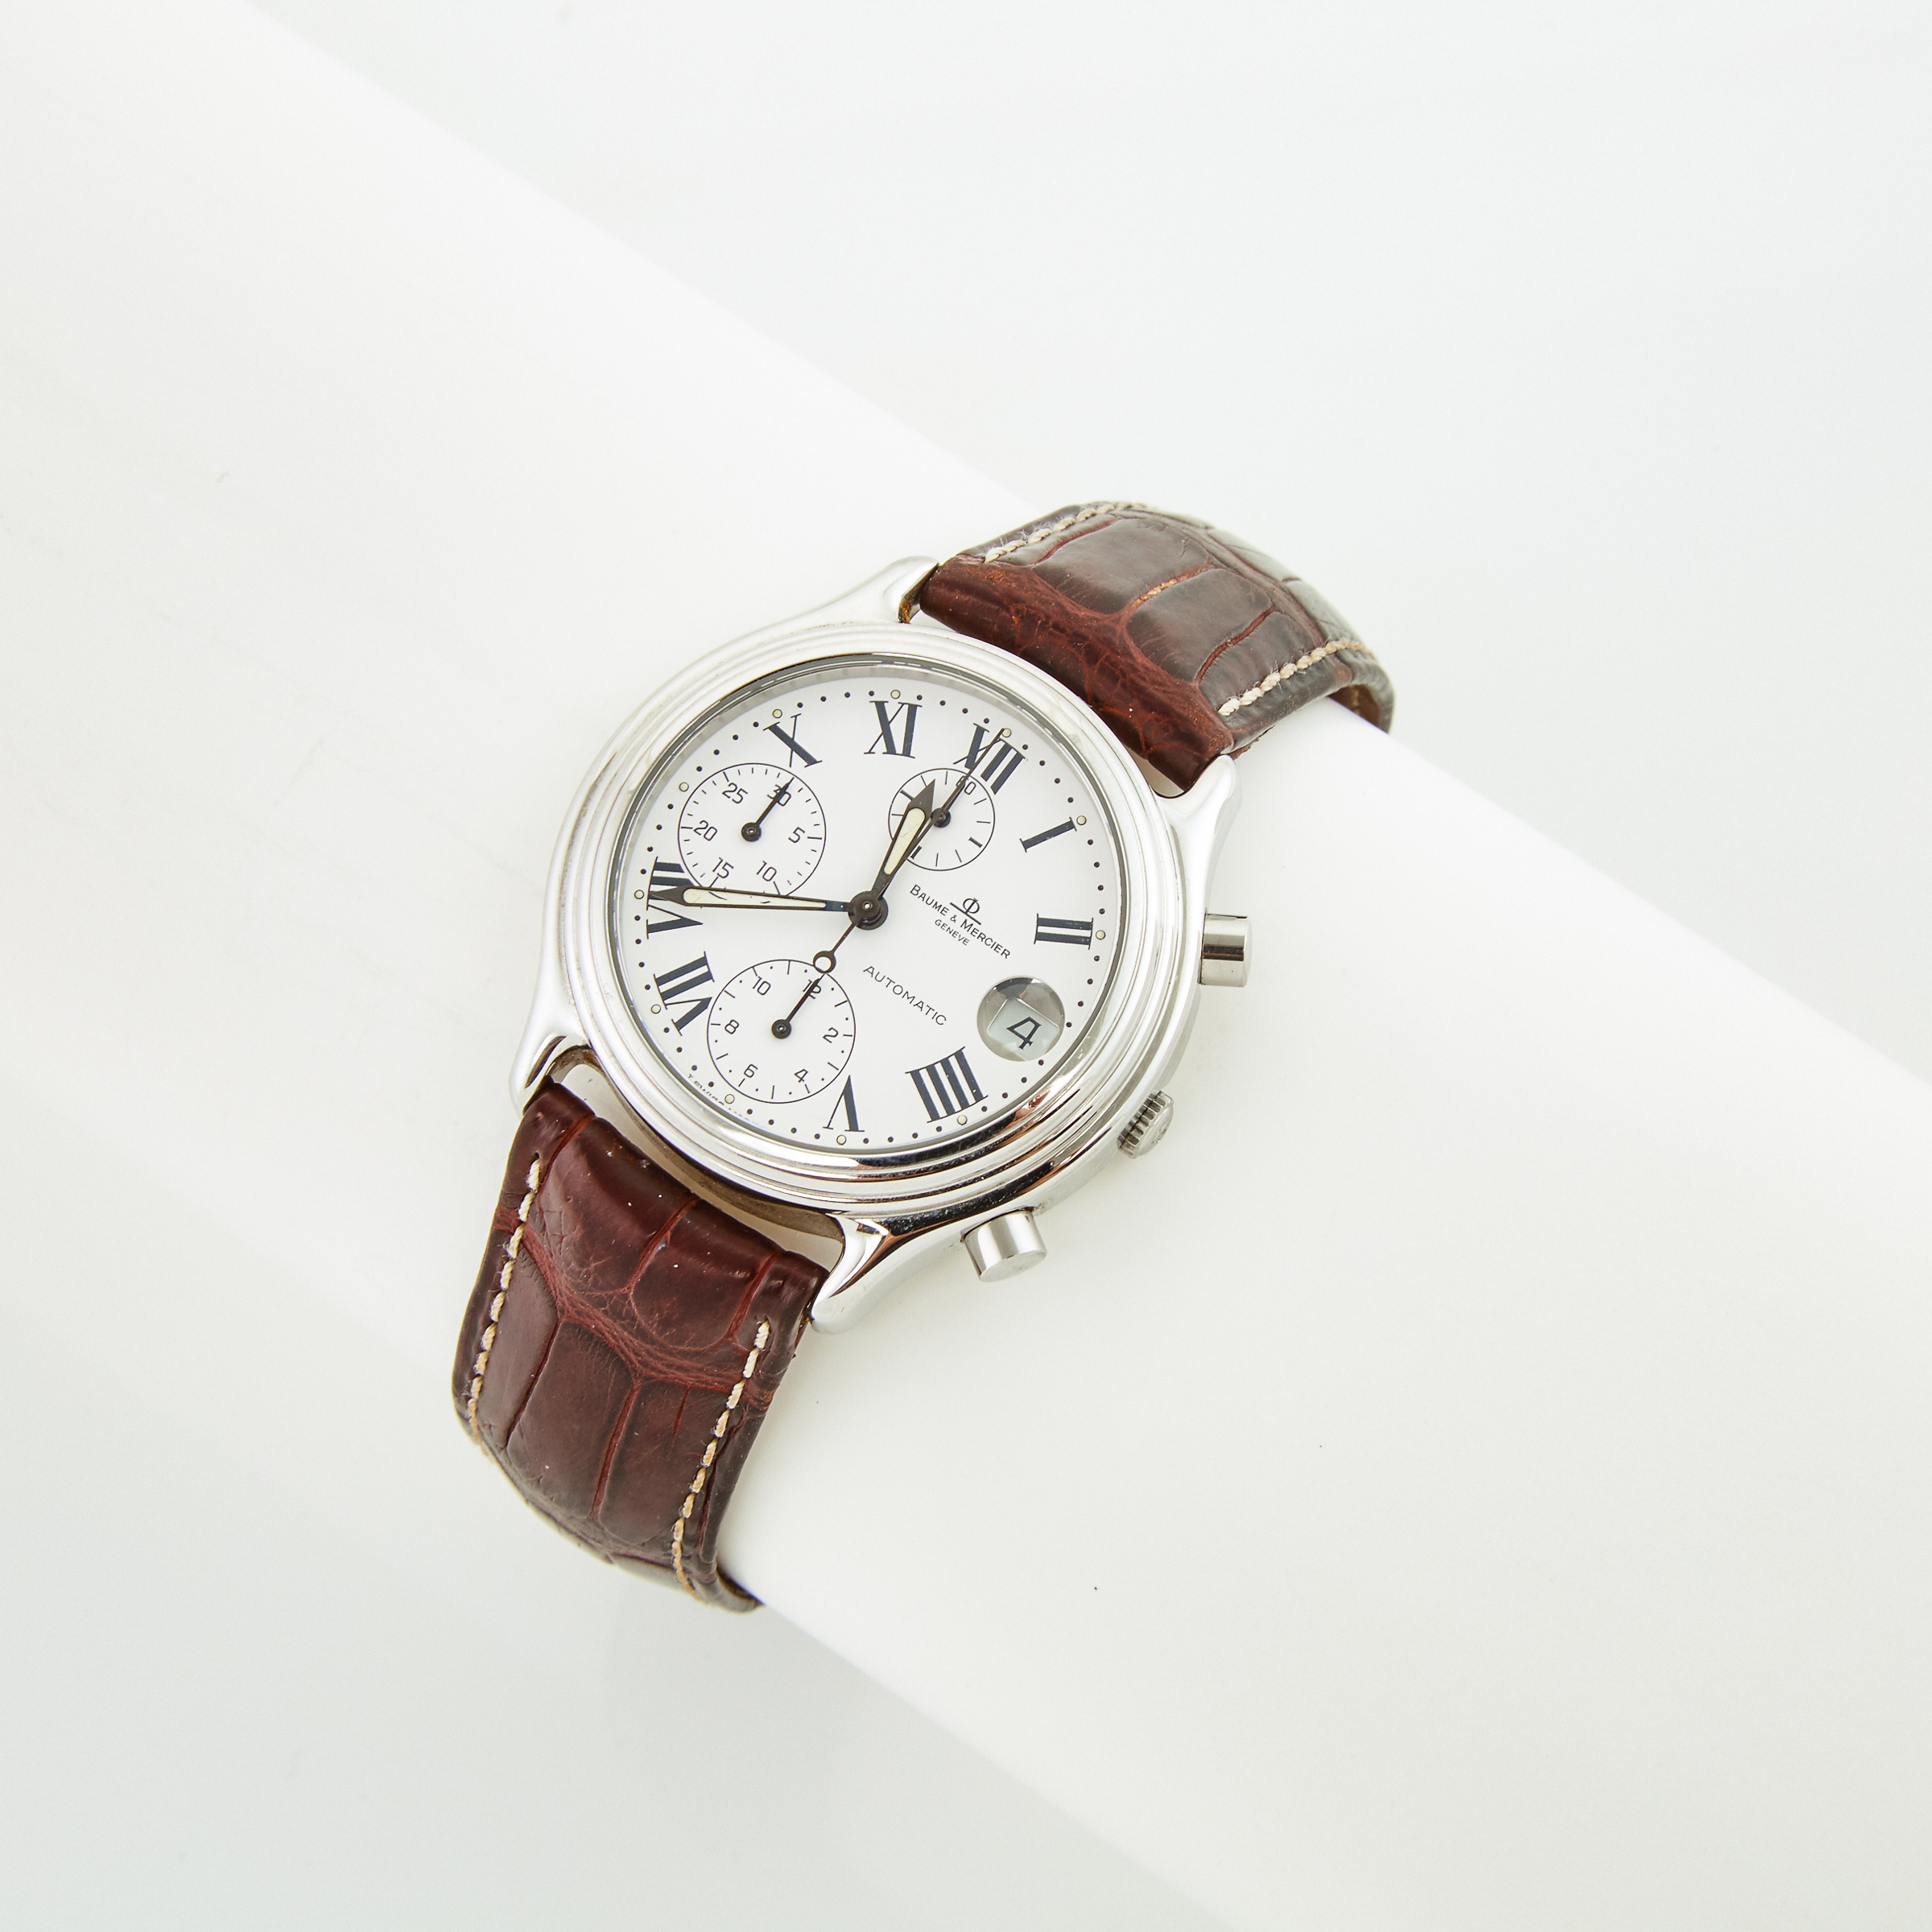 Baume & Mercier Baumatic Chronograph Wristwatch, with Date